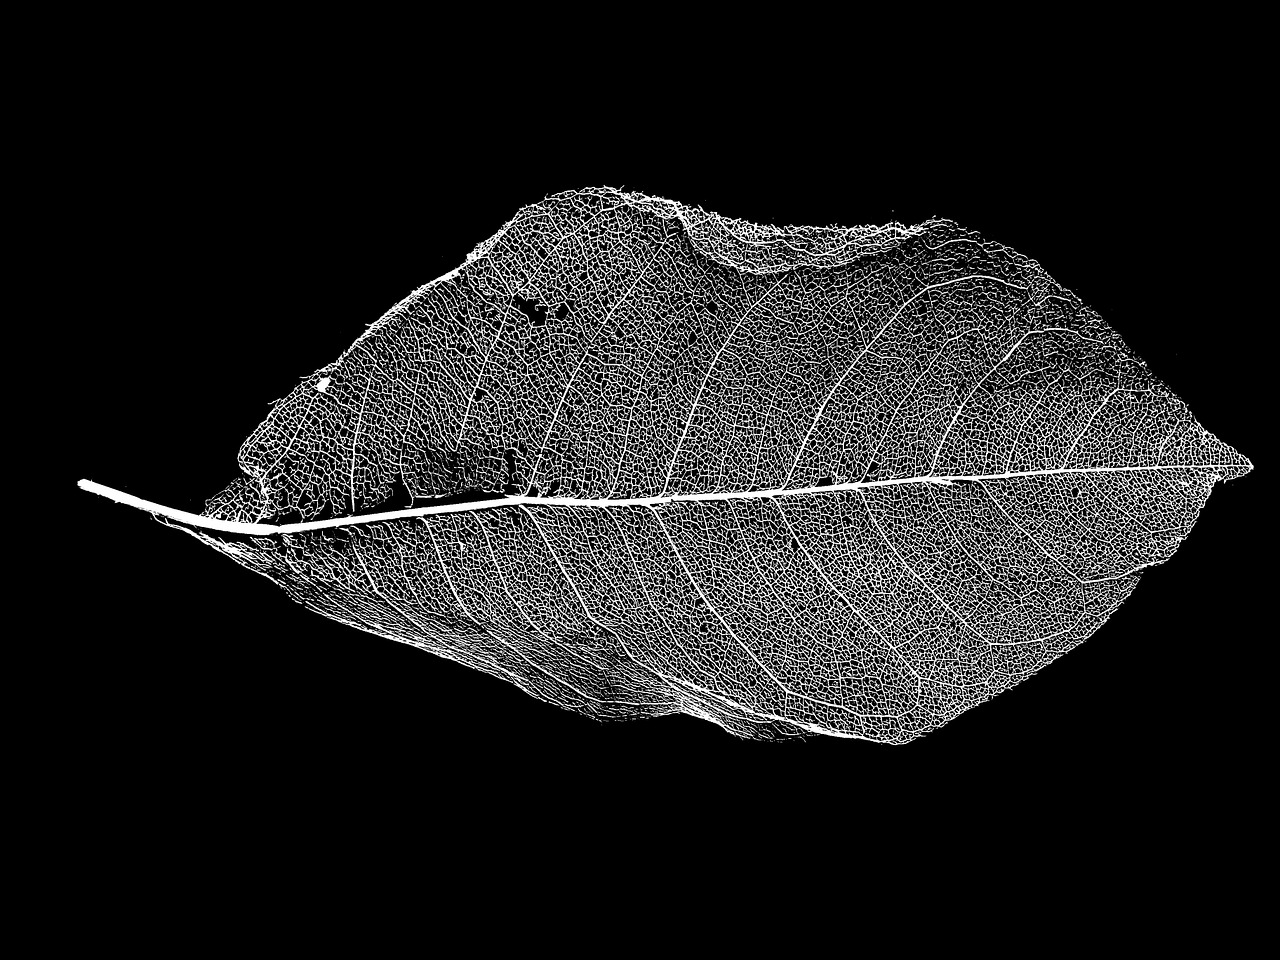 leaf skeleton black and white free photo